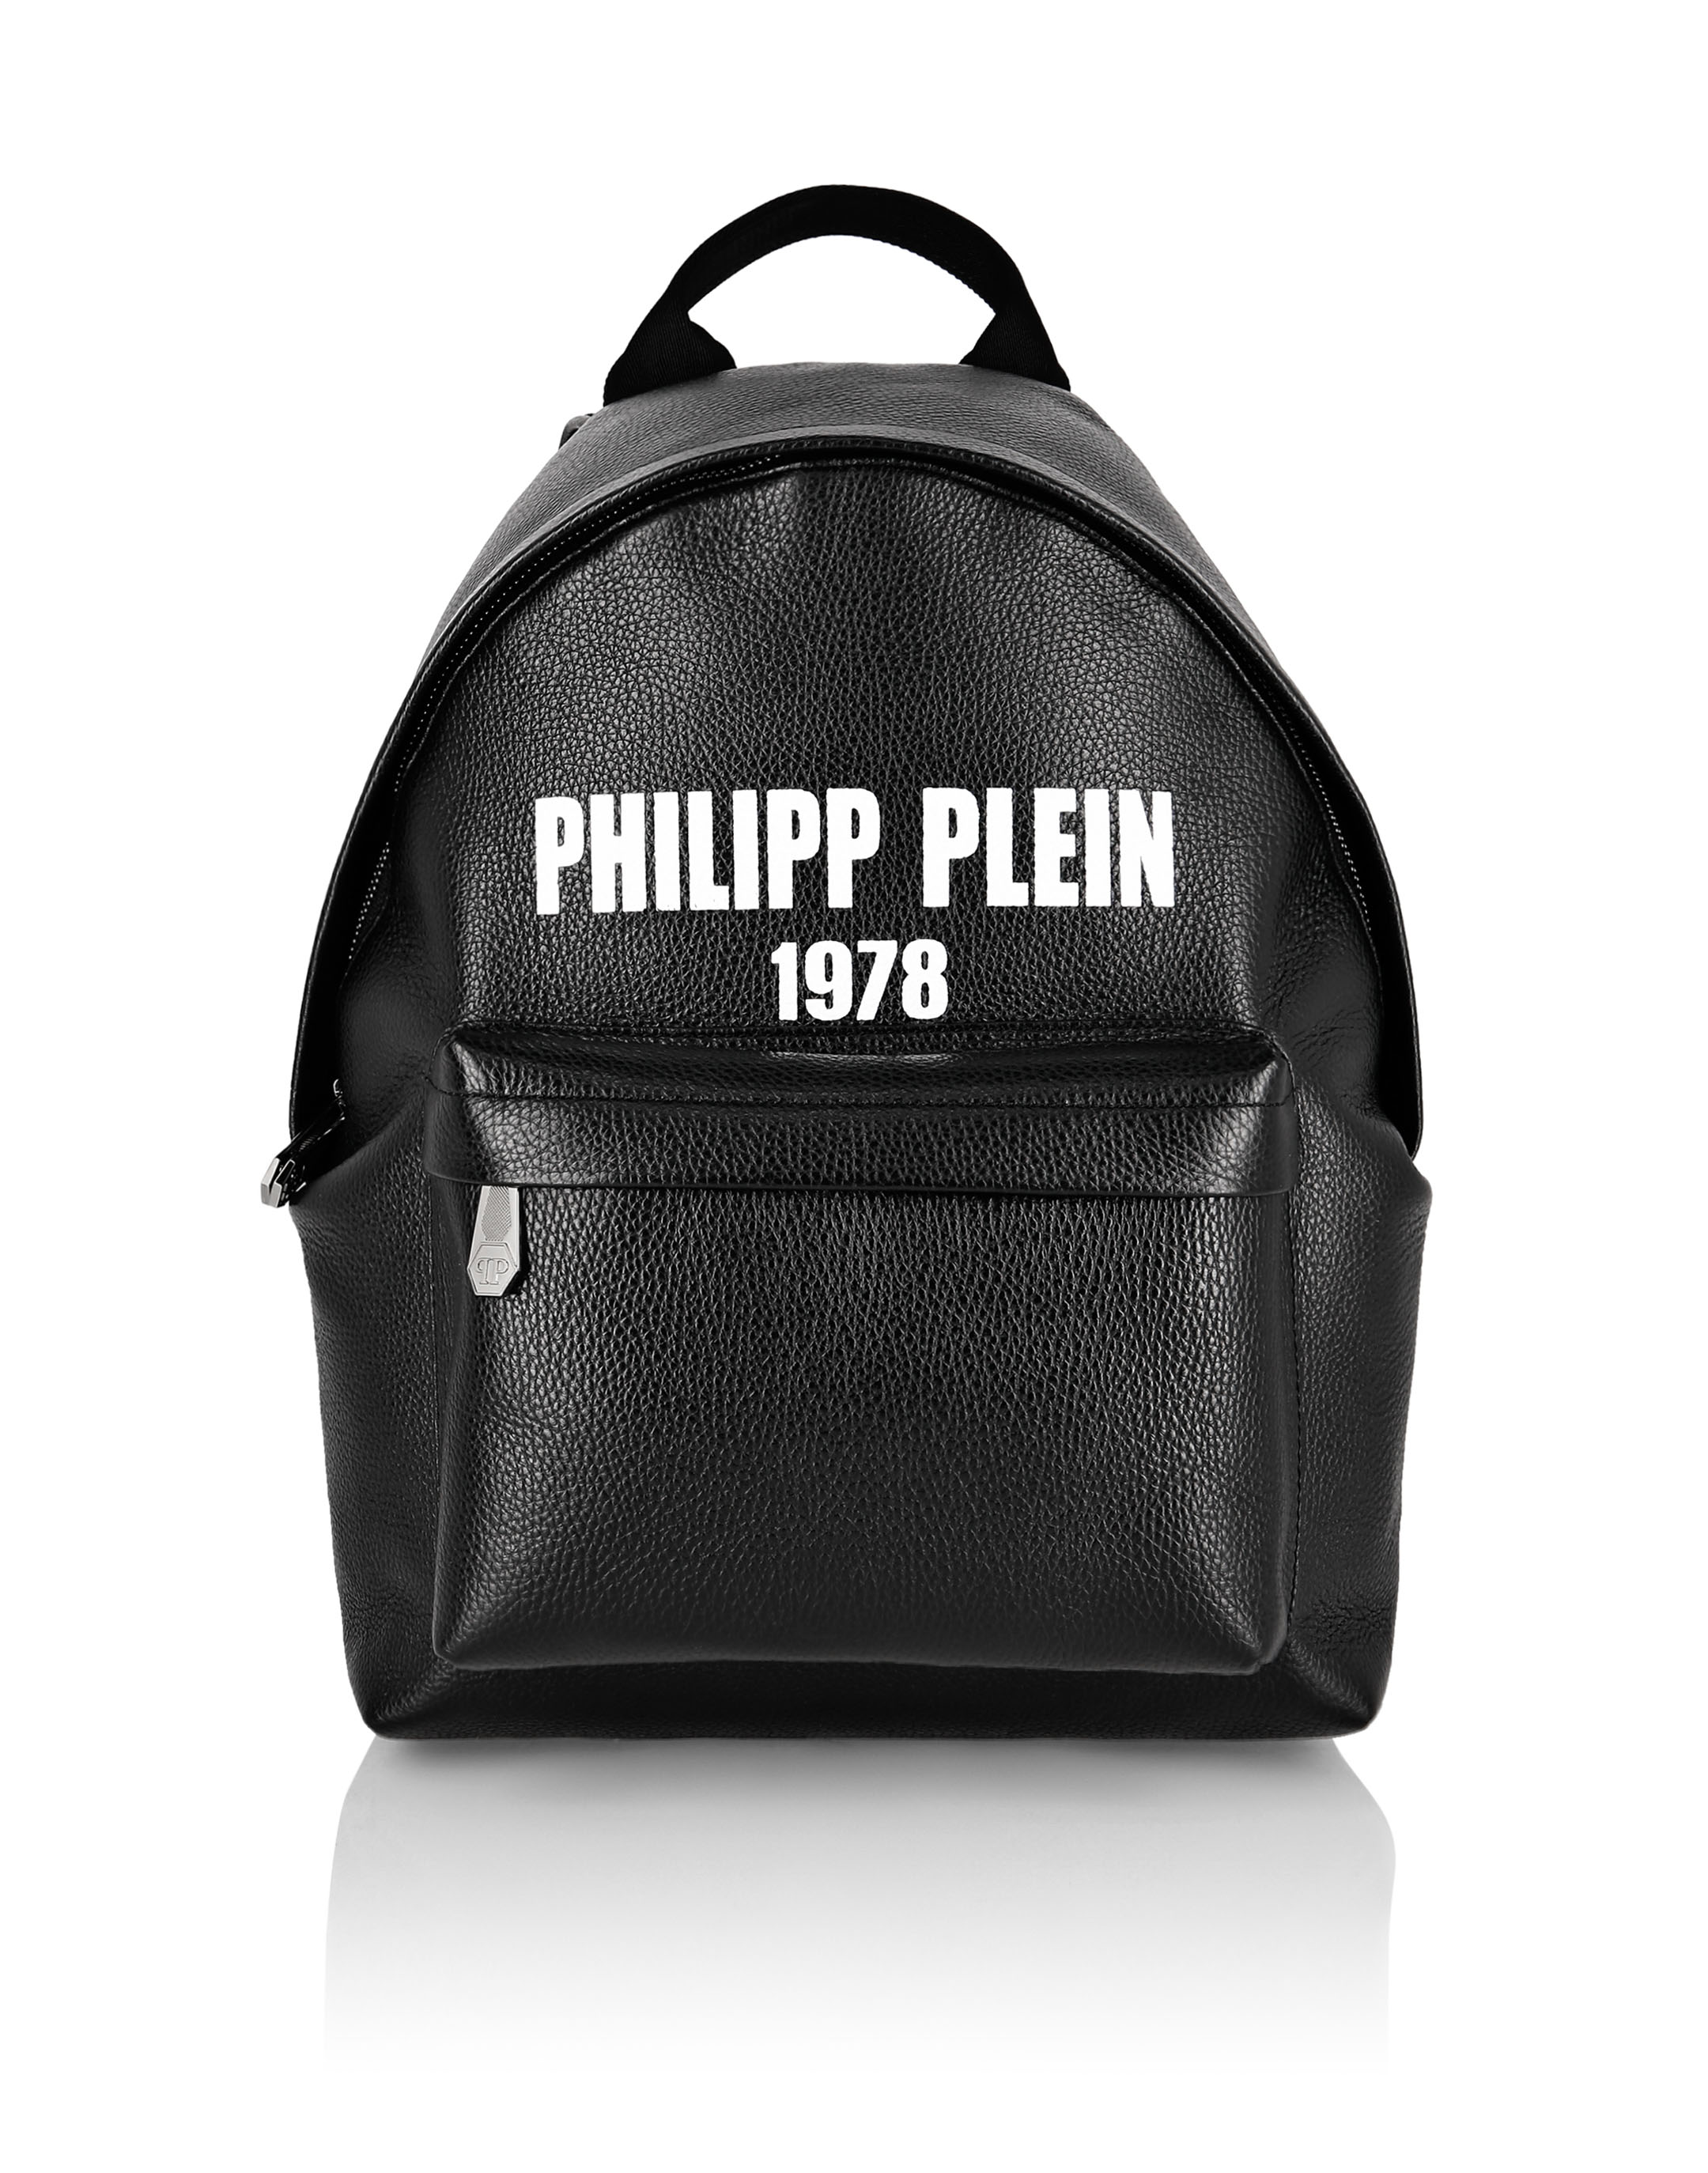 philipp plein backpack sale